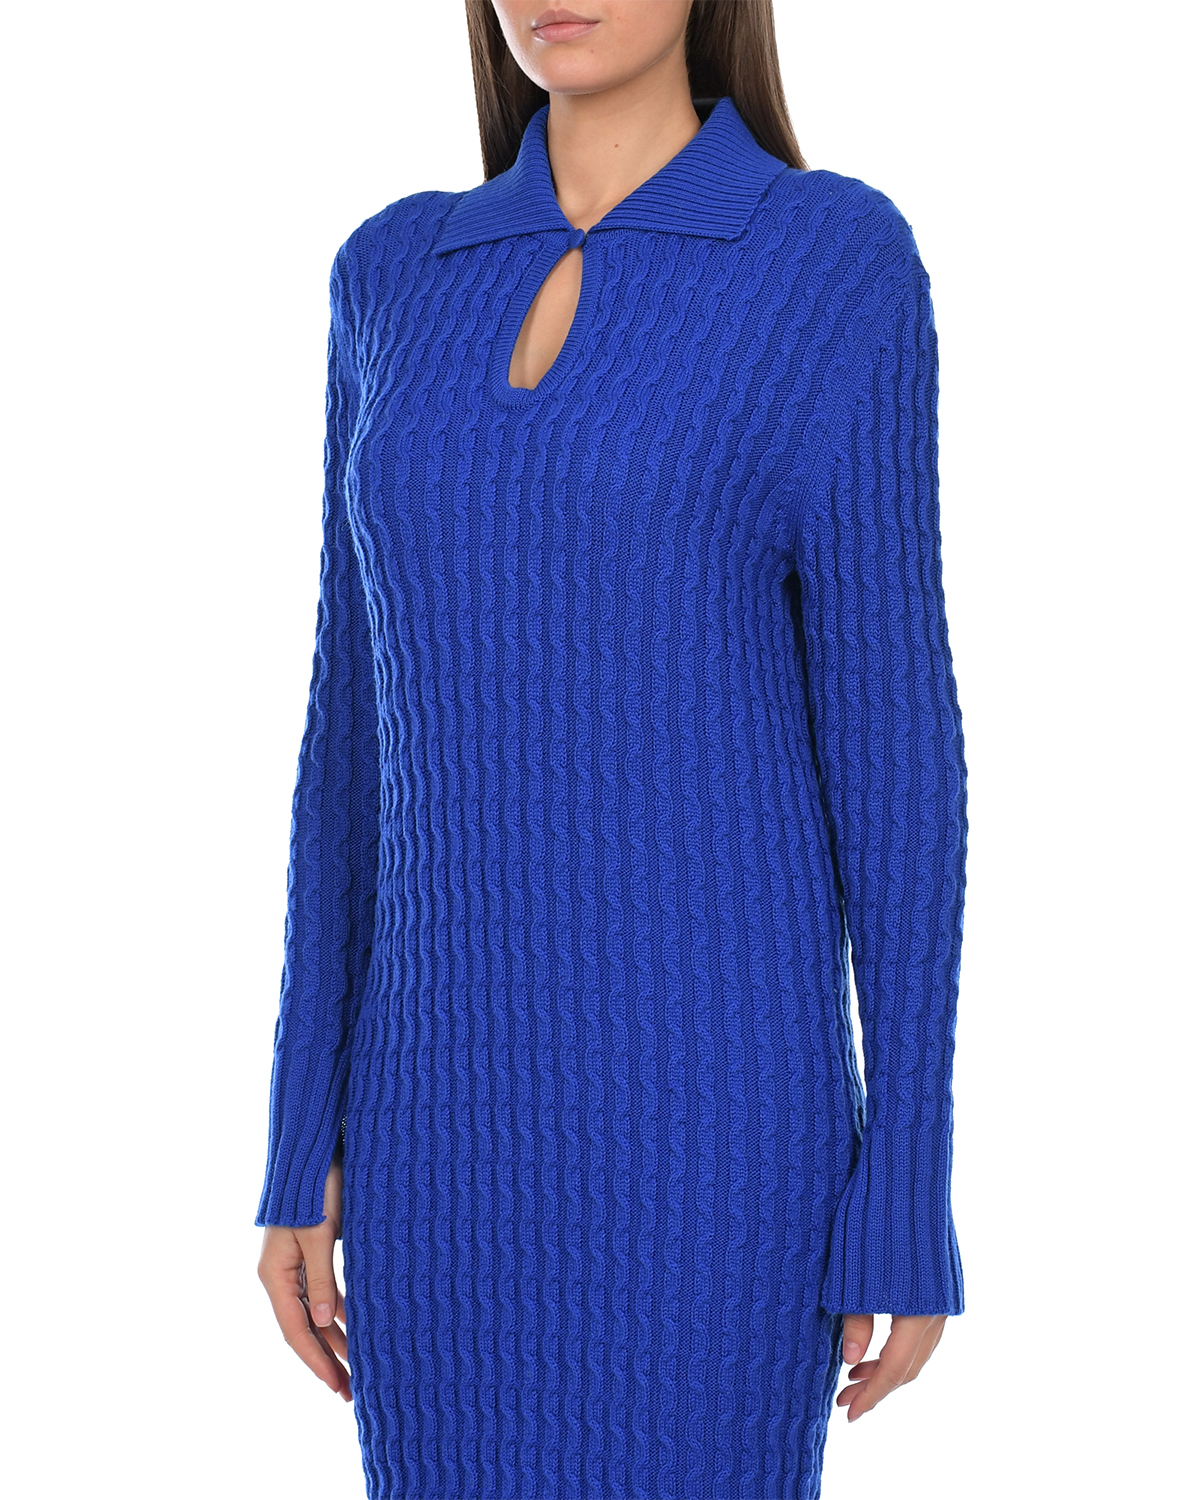 Ярко-синее платье из трикотажа Vivetta, размер 42, цвет нет цвета - фото 7